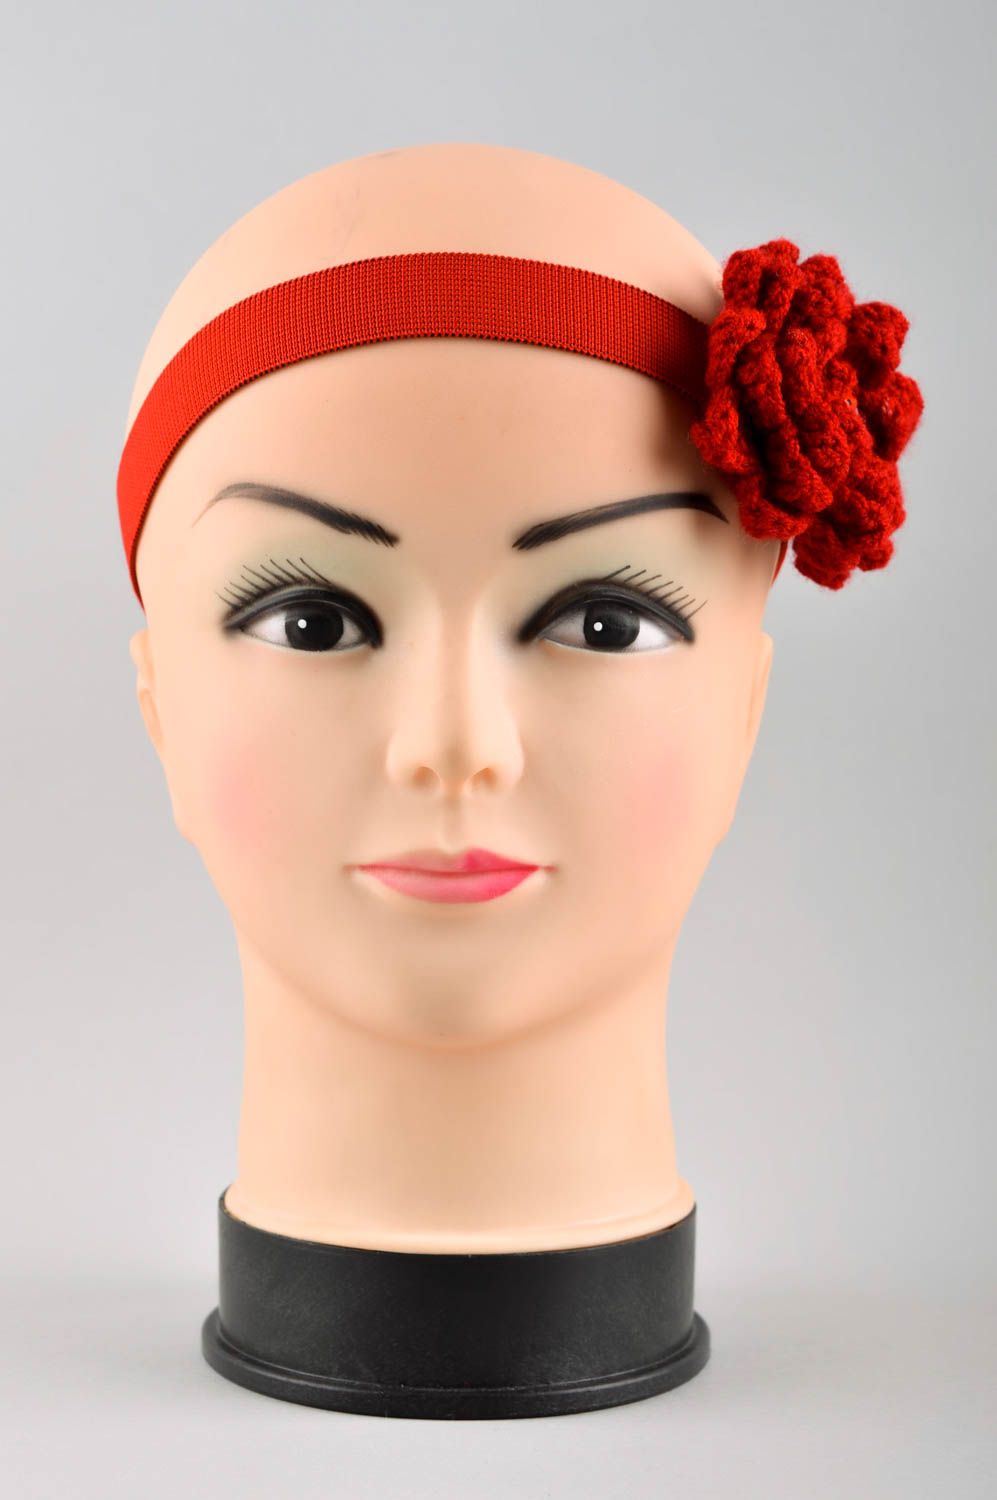 Handmade headband unusual head accessory designer headband gift ideas photo 3